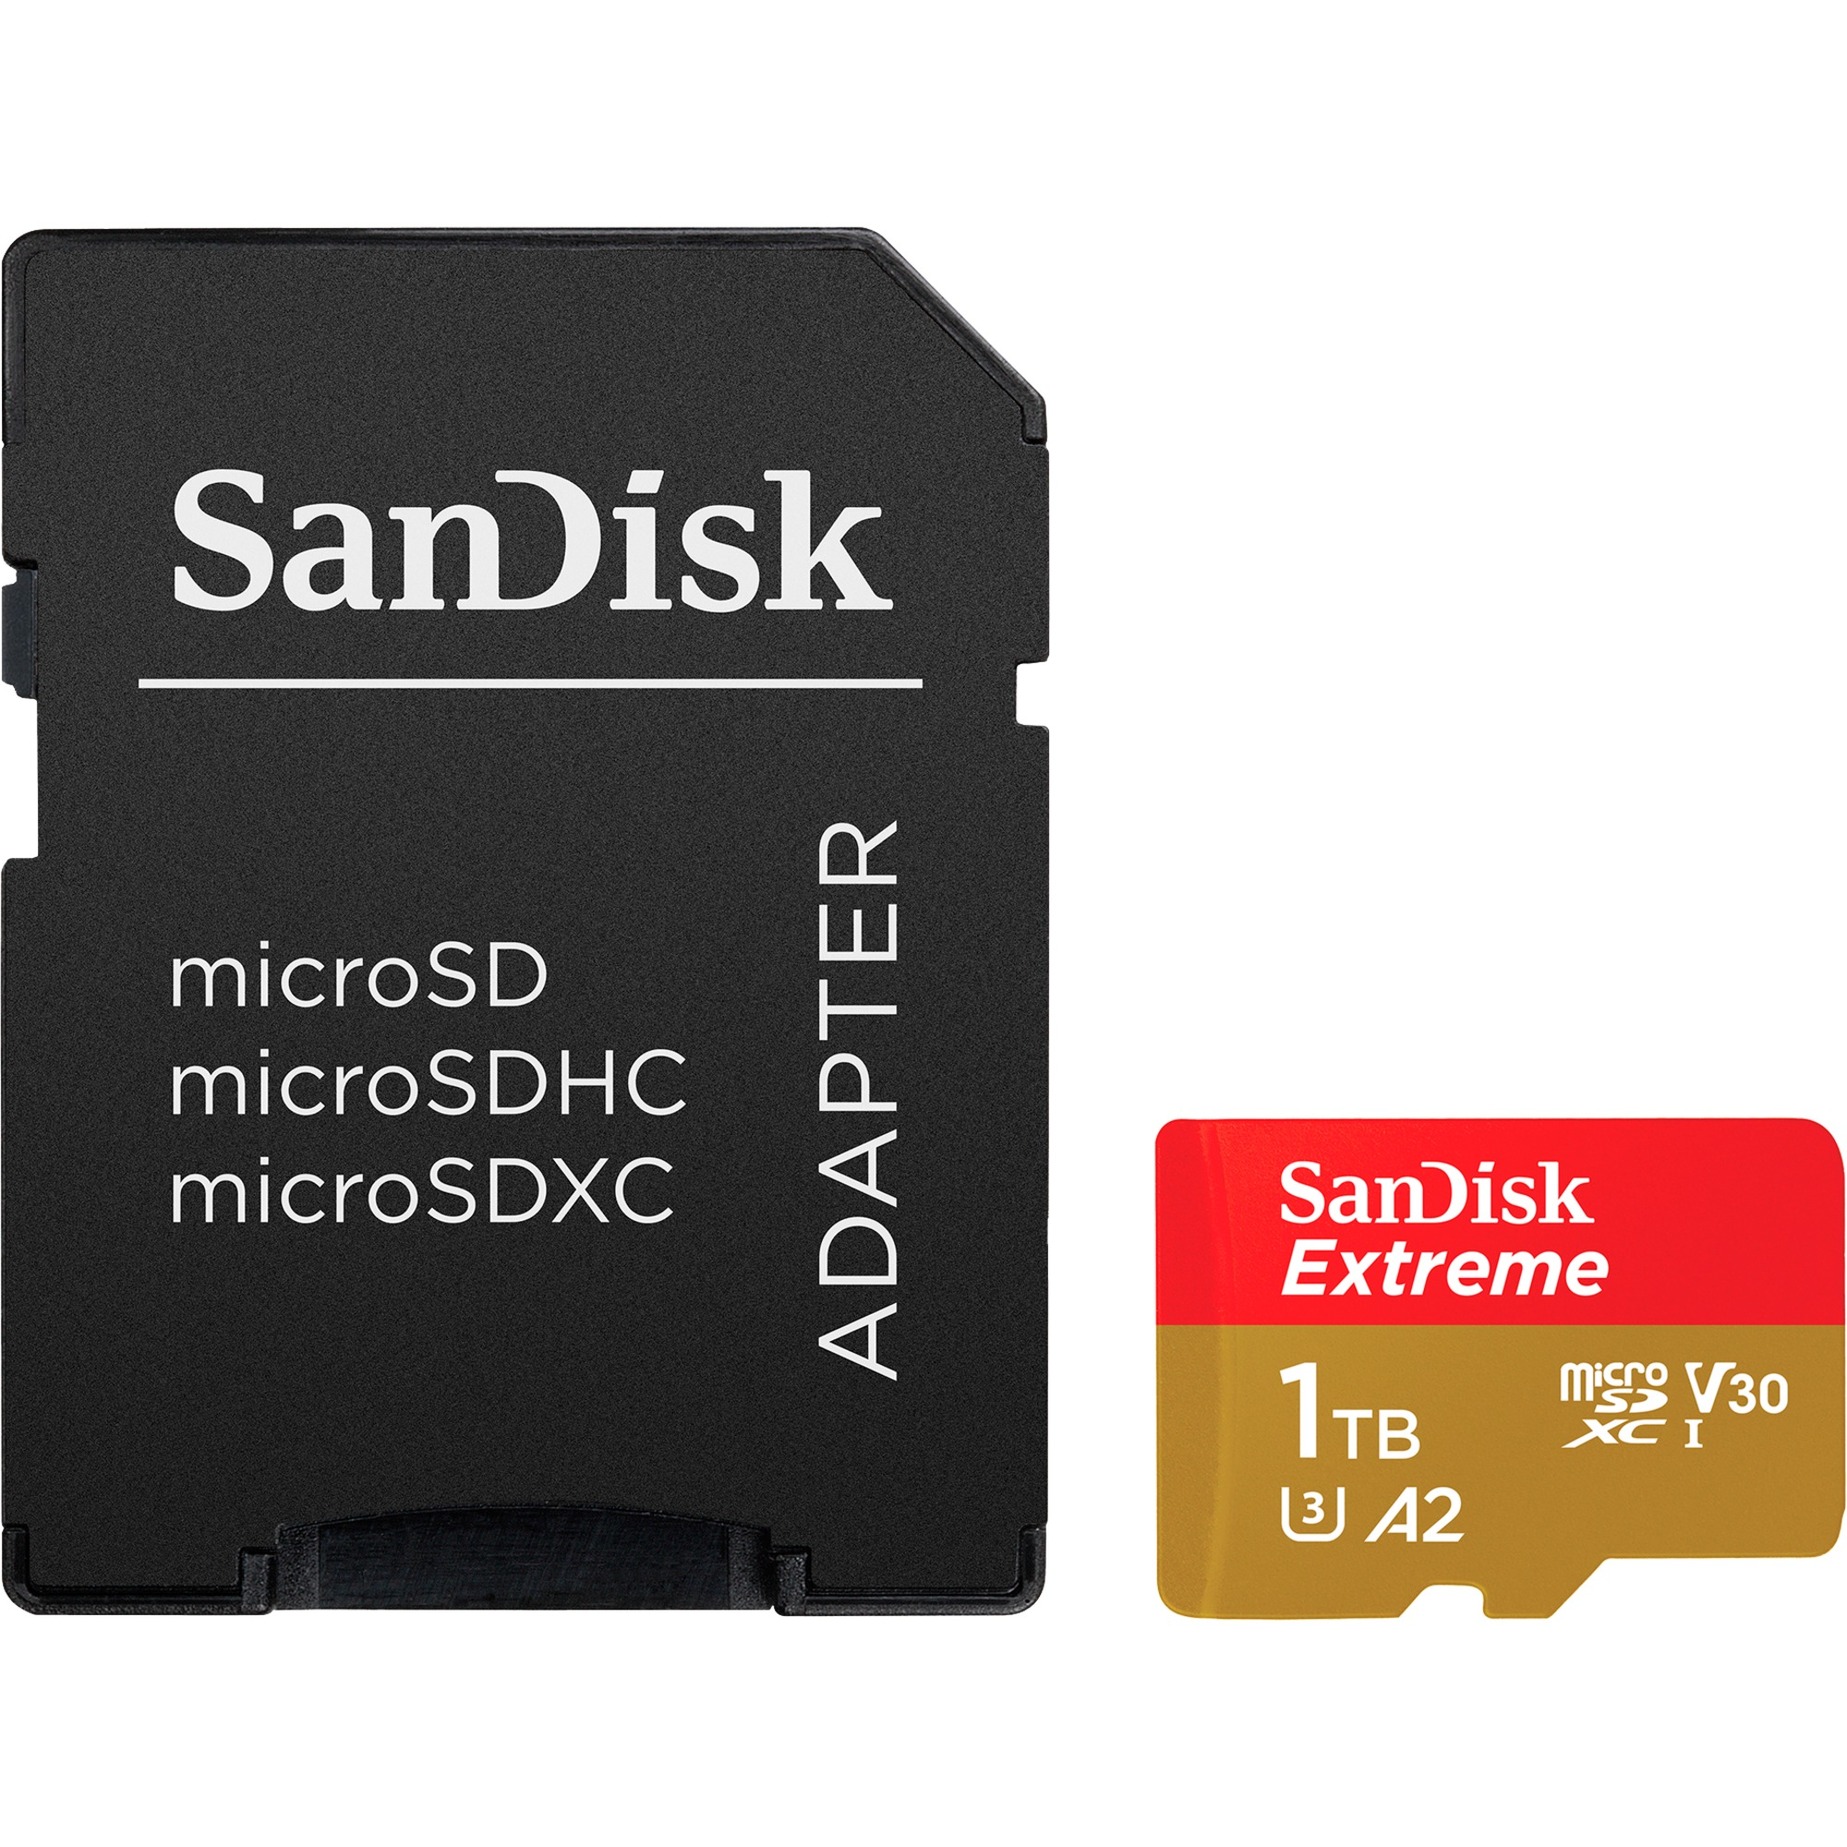 Image of Alternate - Extreme 1 TB microSDXC, Speicherkarte online einkaufen bei Alternate